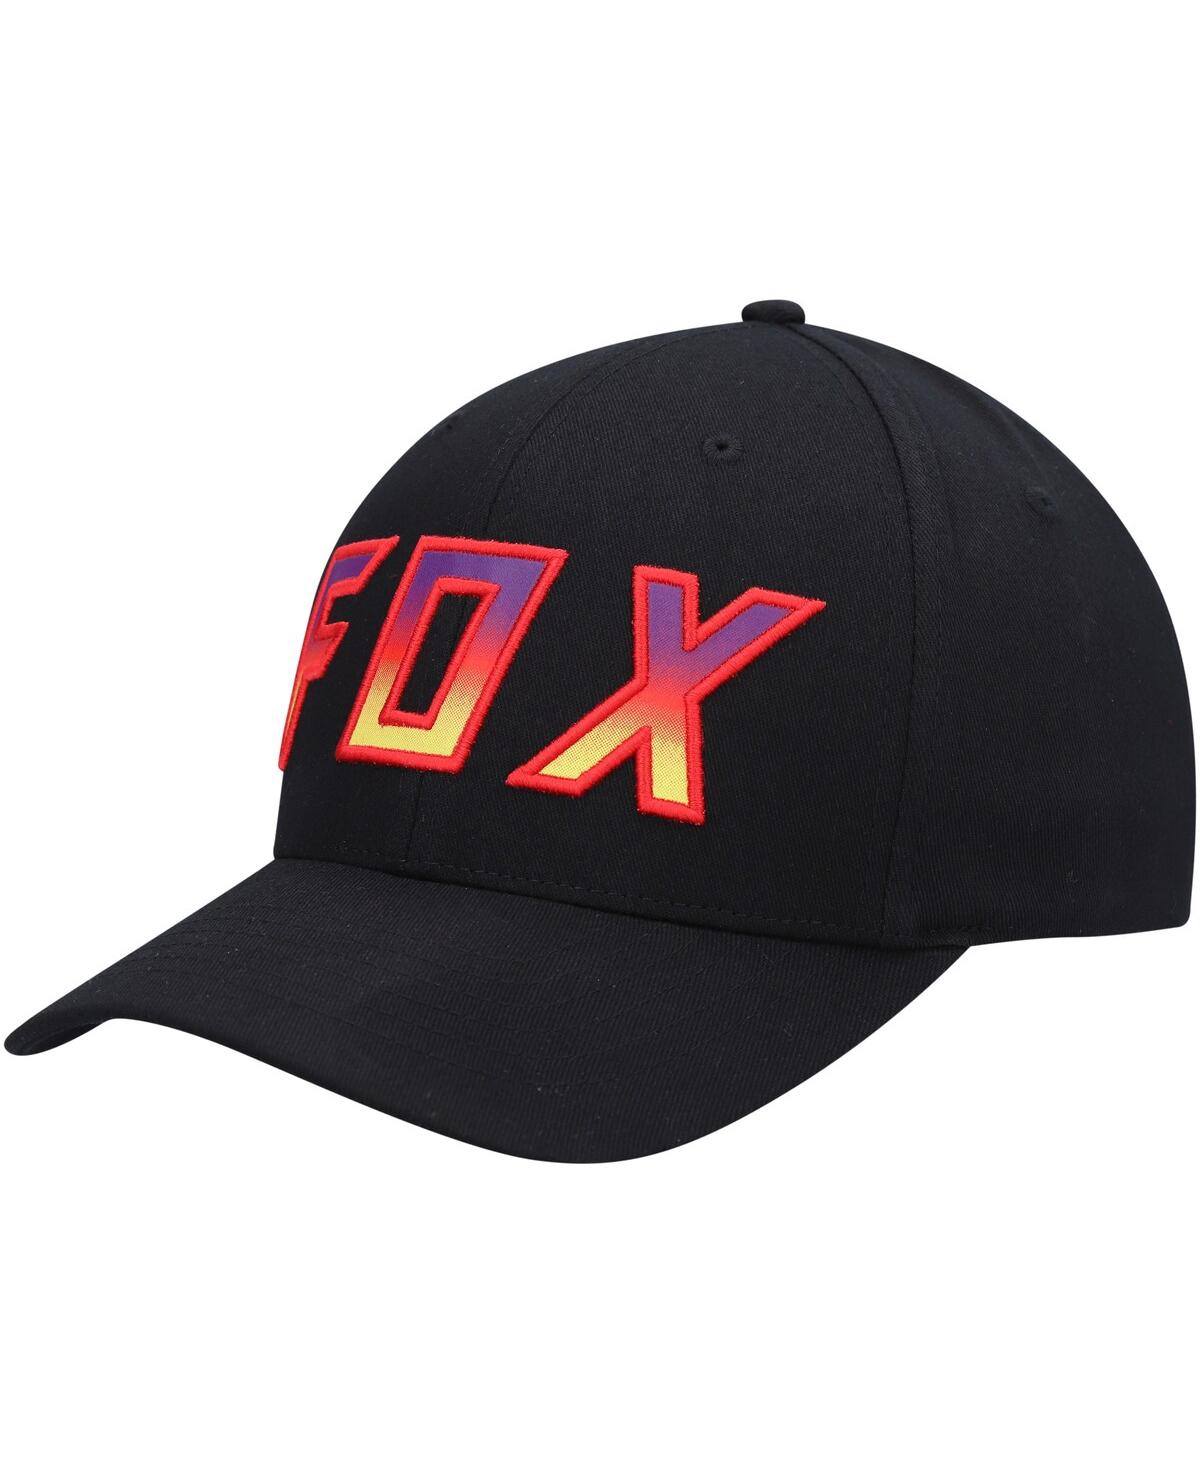 Men's Fox Black Fgmnt Flex Hat - Black